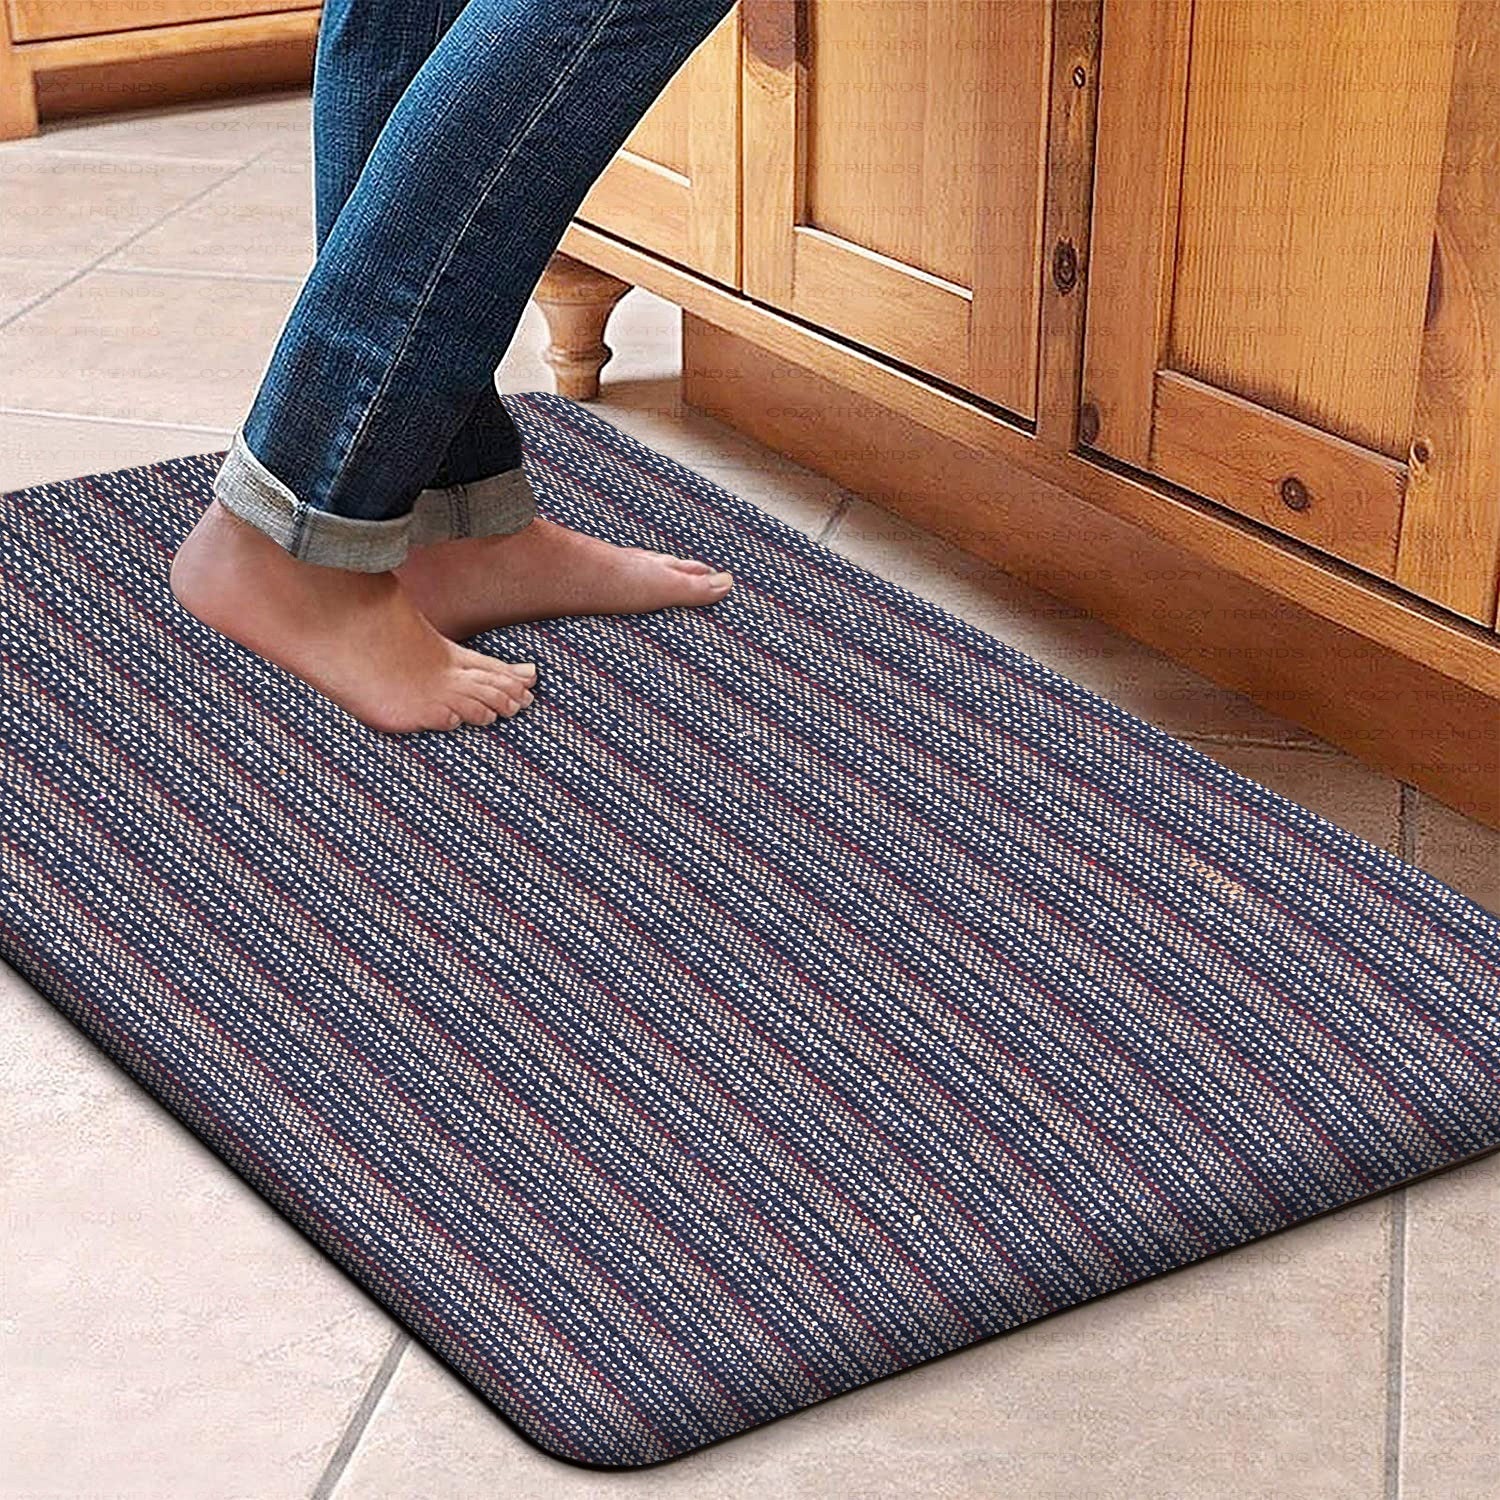 Kitcheniva Moisture Guard Doormat Slip Resistant Dirt Trapping Rugs